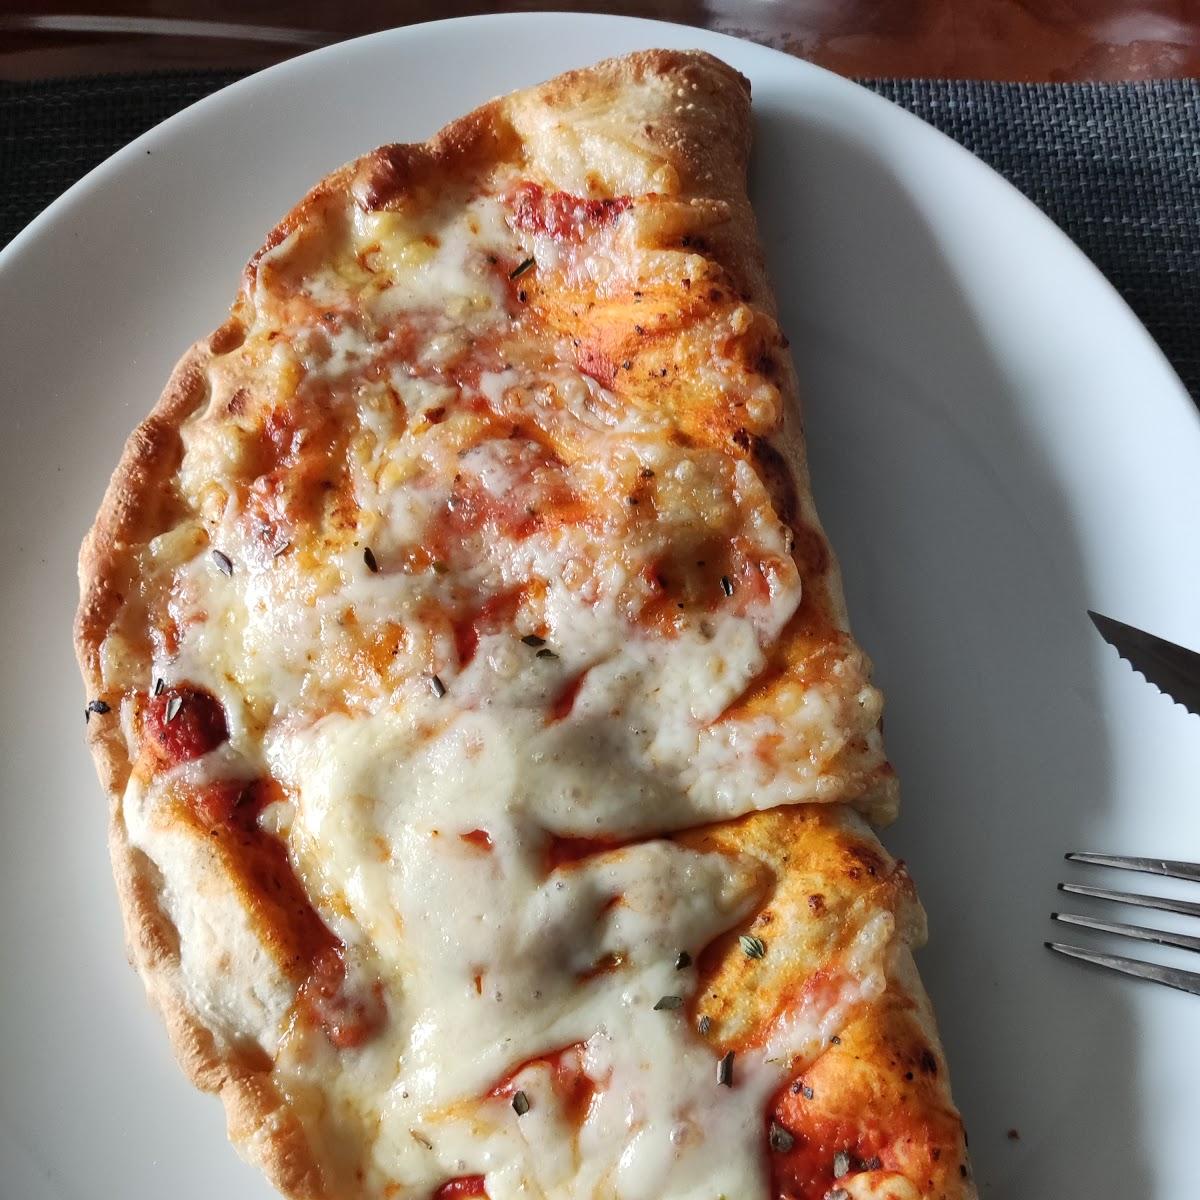 Restaurant "I NEED A PIZZA" in Düren